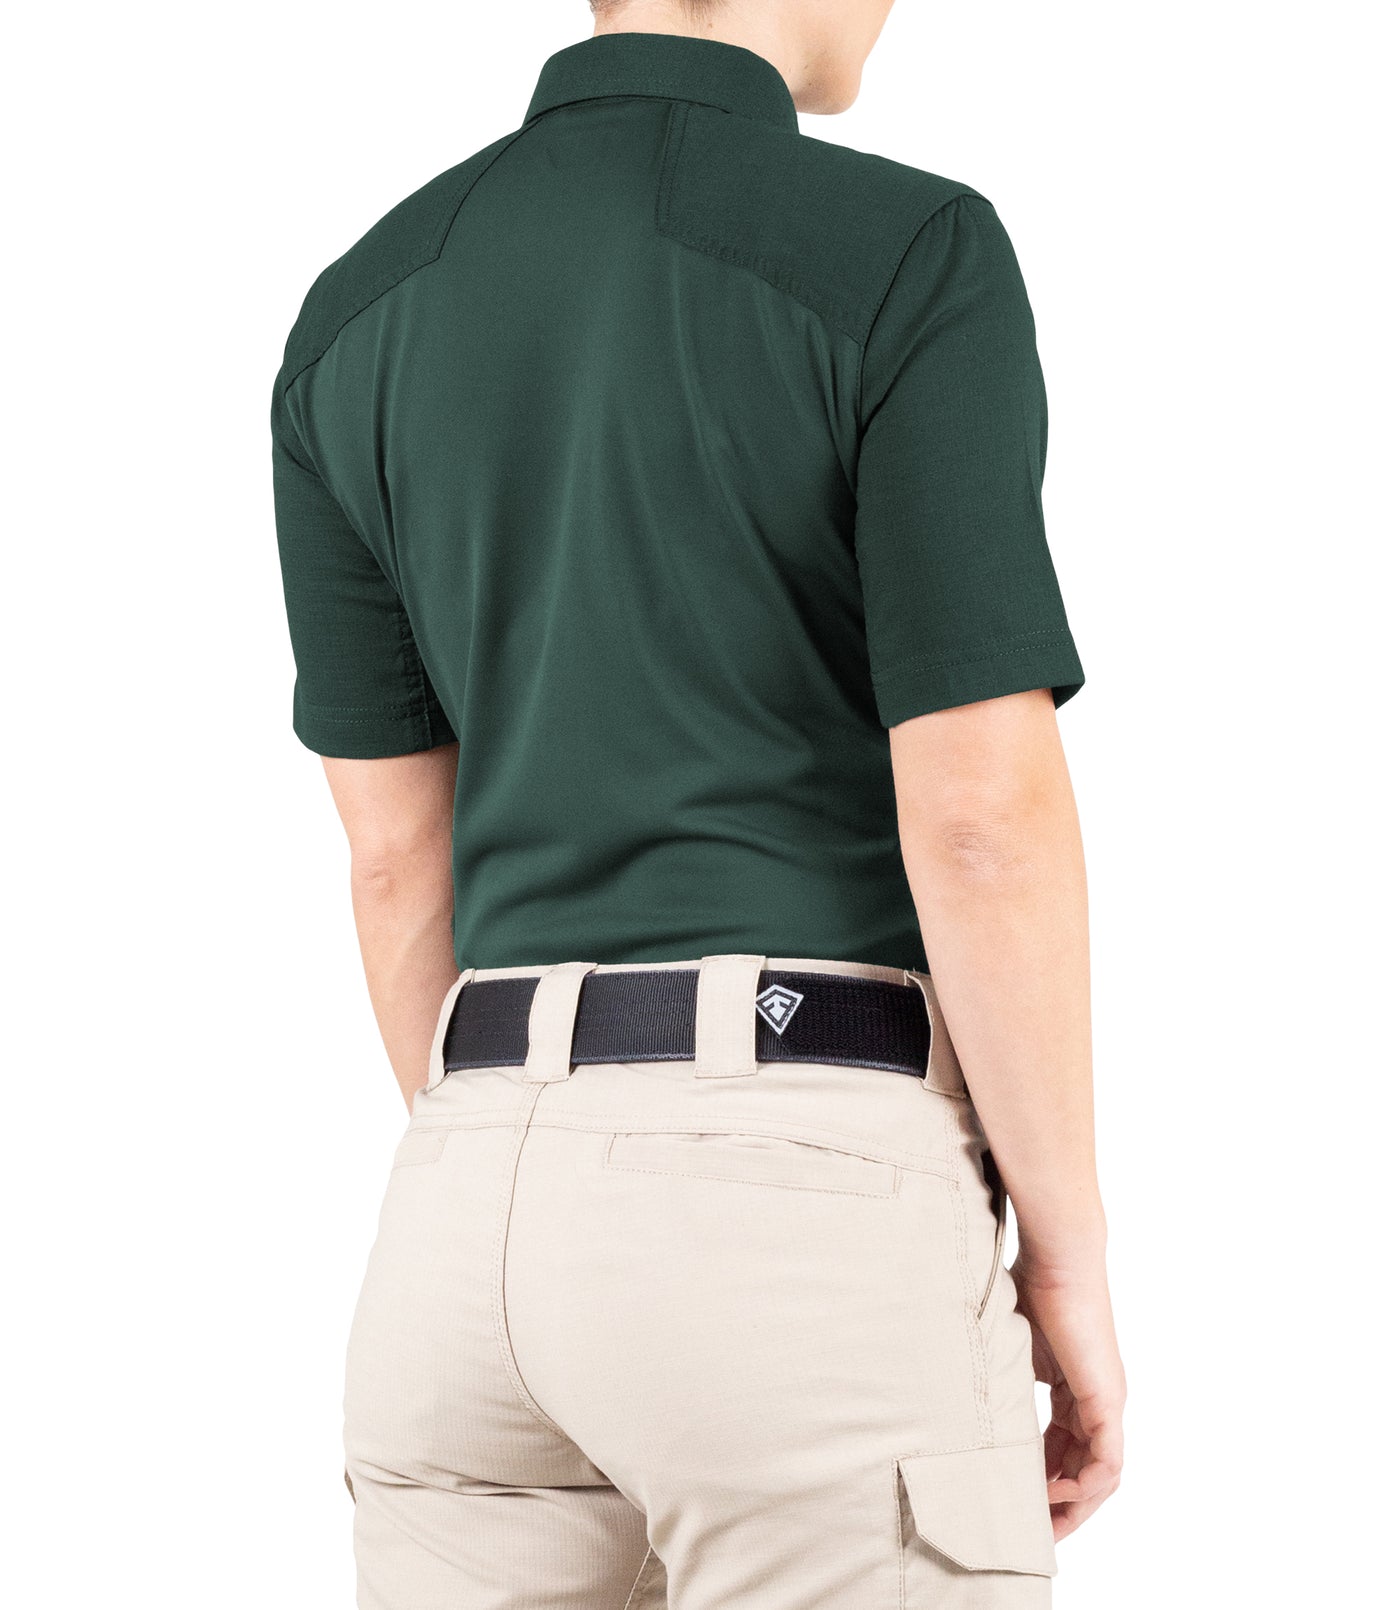 Side of Women's V2 Pro Performance Short Sleeve Shirt in Spruce Green